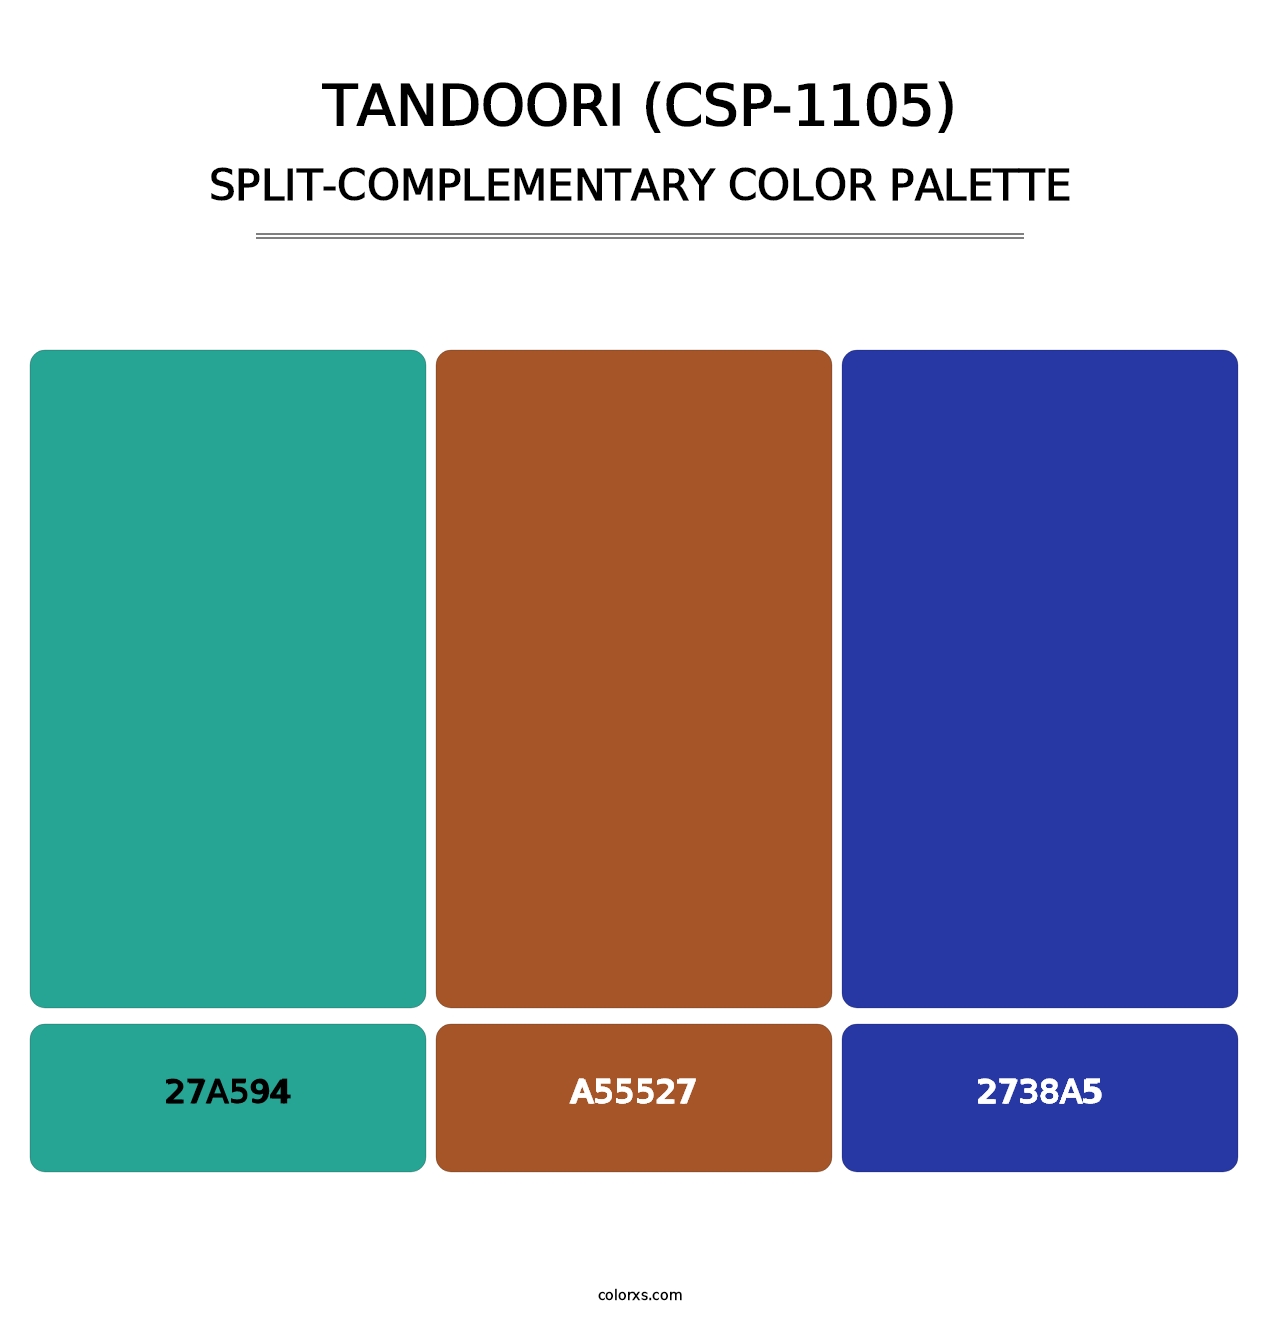 Tandoori (CSP-1105) - Split-Complementary Color Palette